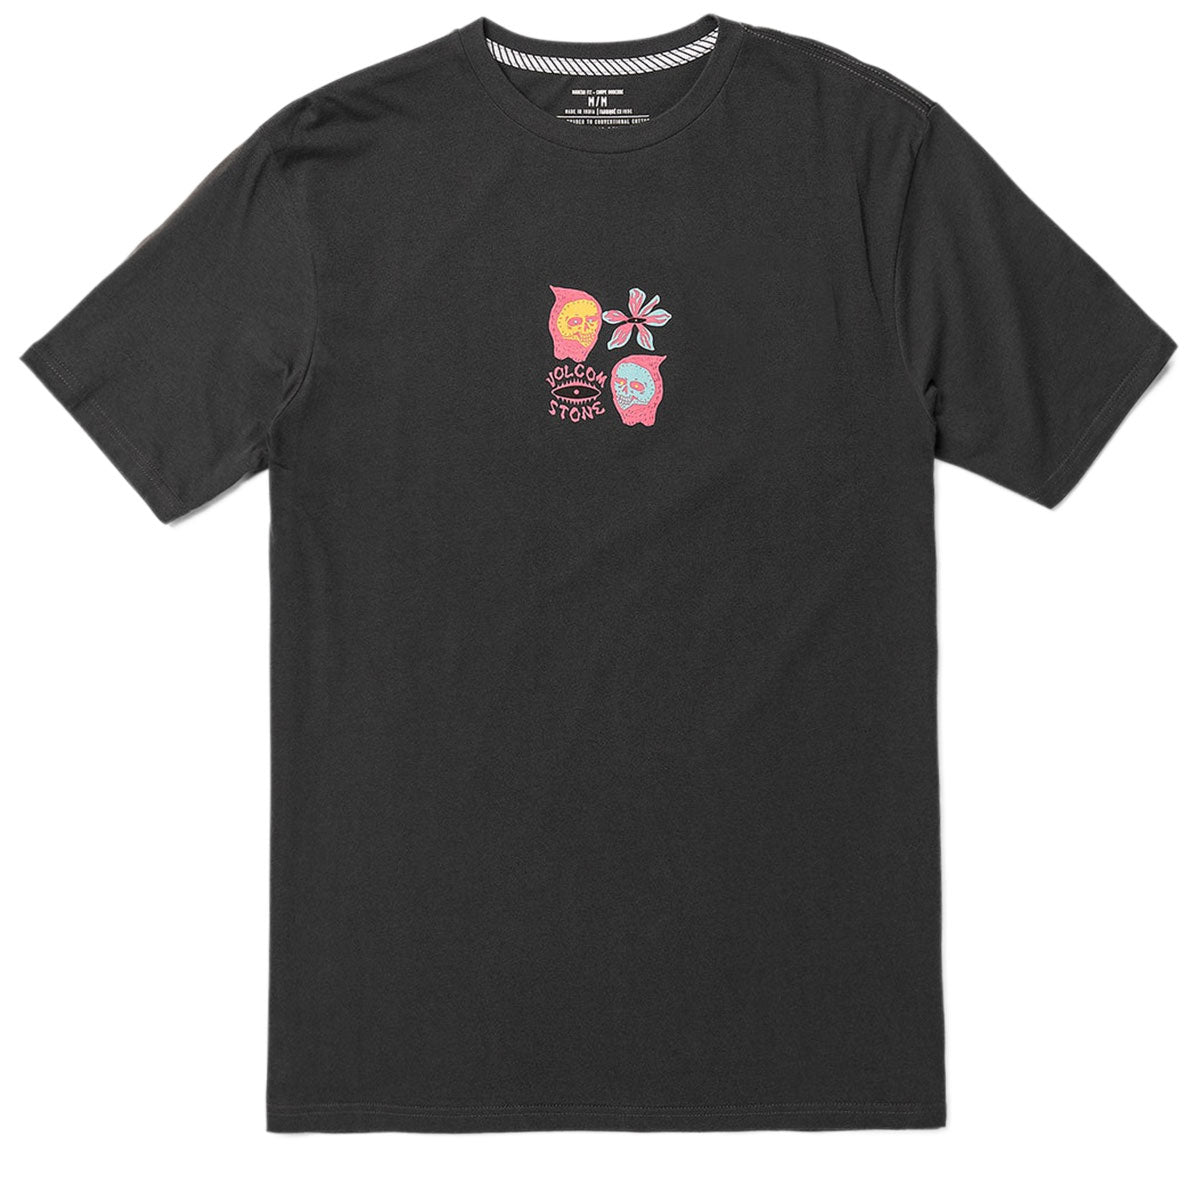 Volcom Flower Budz Fty T-Shirt - Stealth image 1